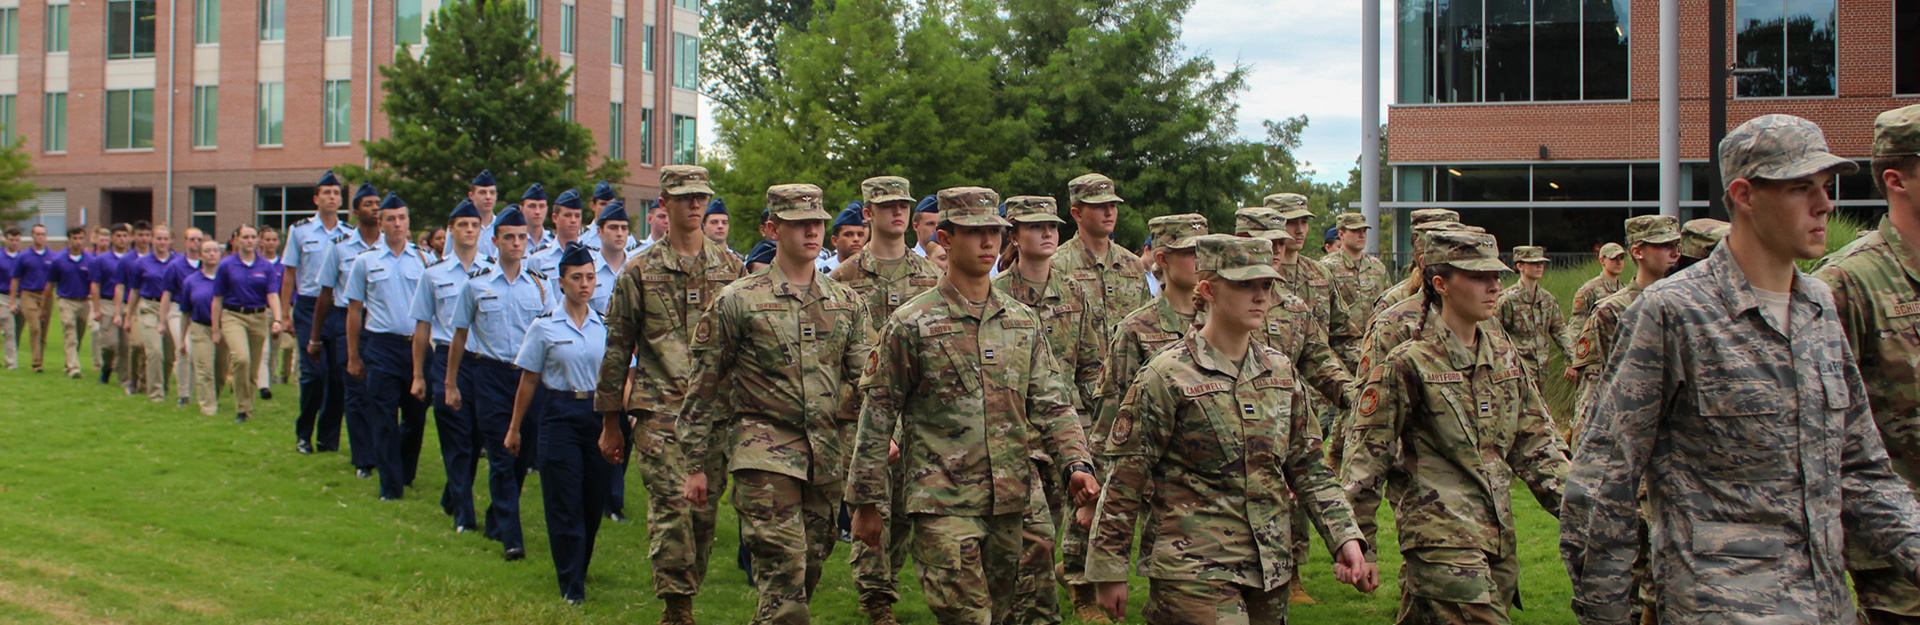 Cadets in dress uniform marching along sidewalk.